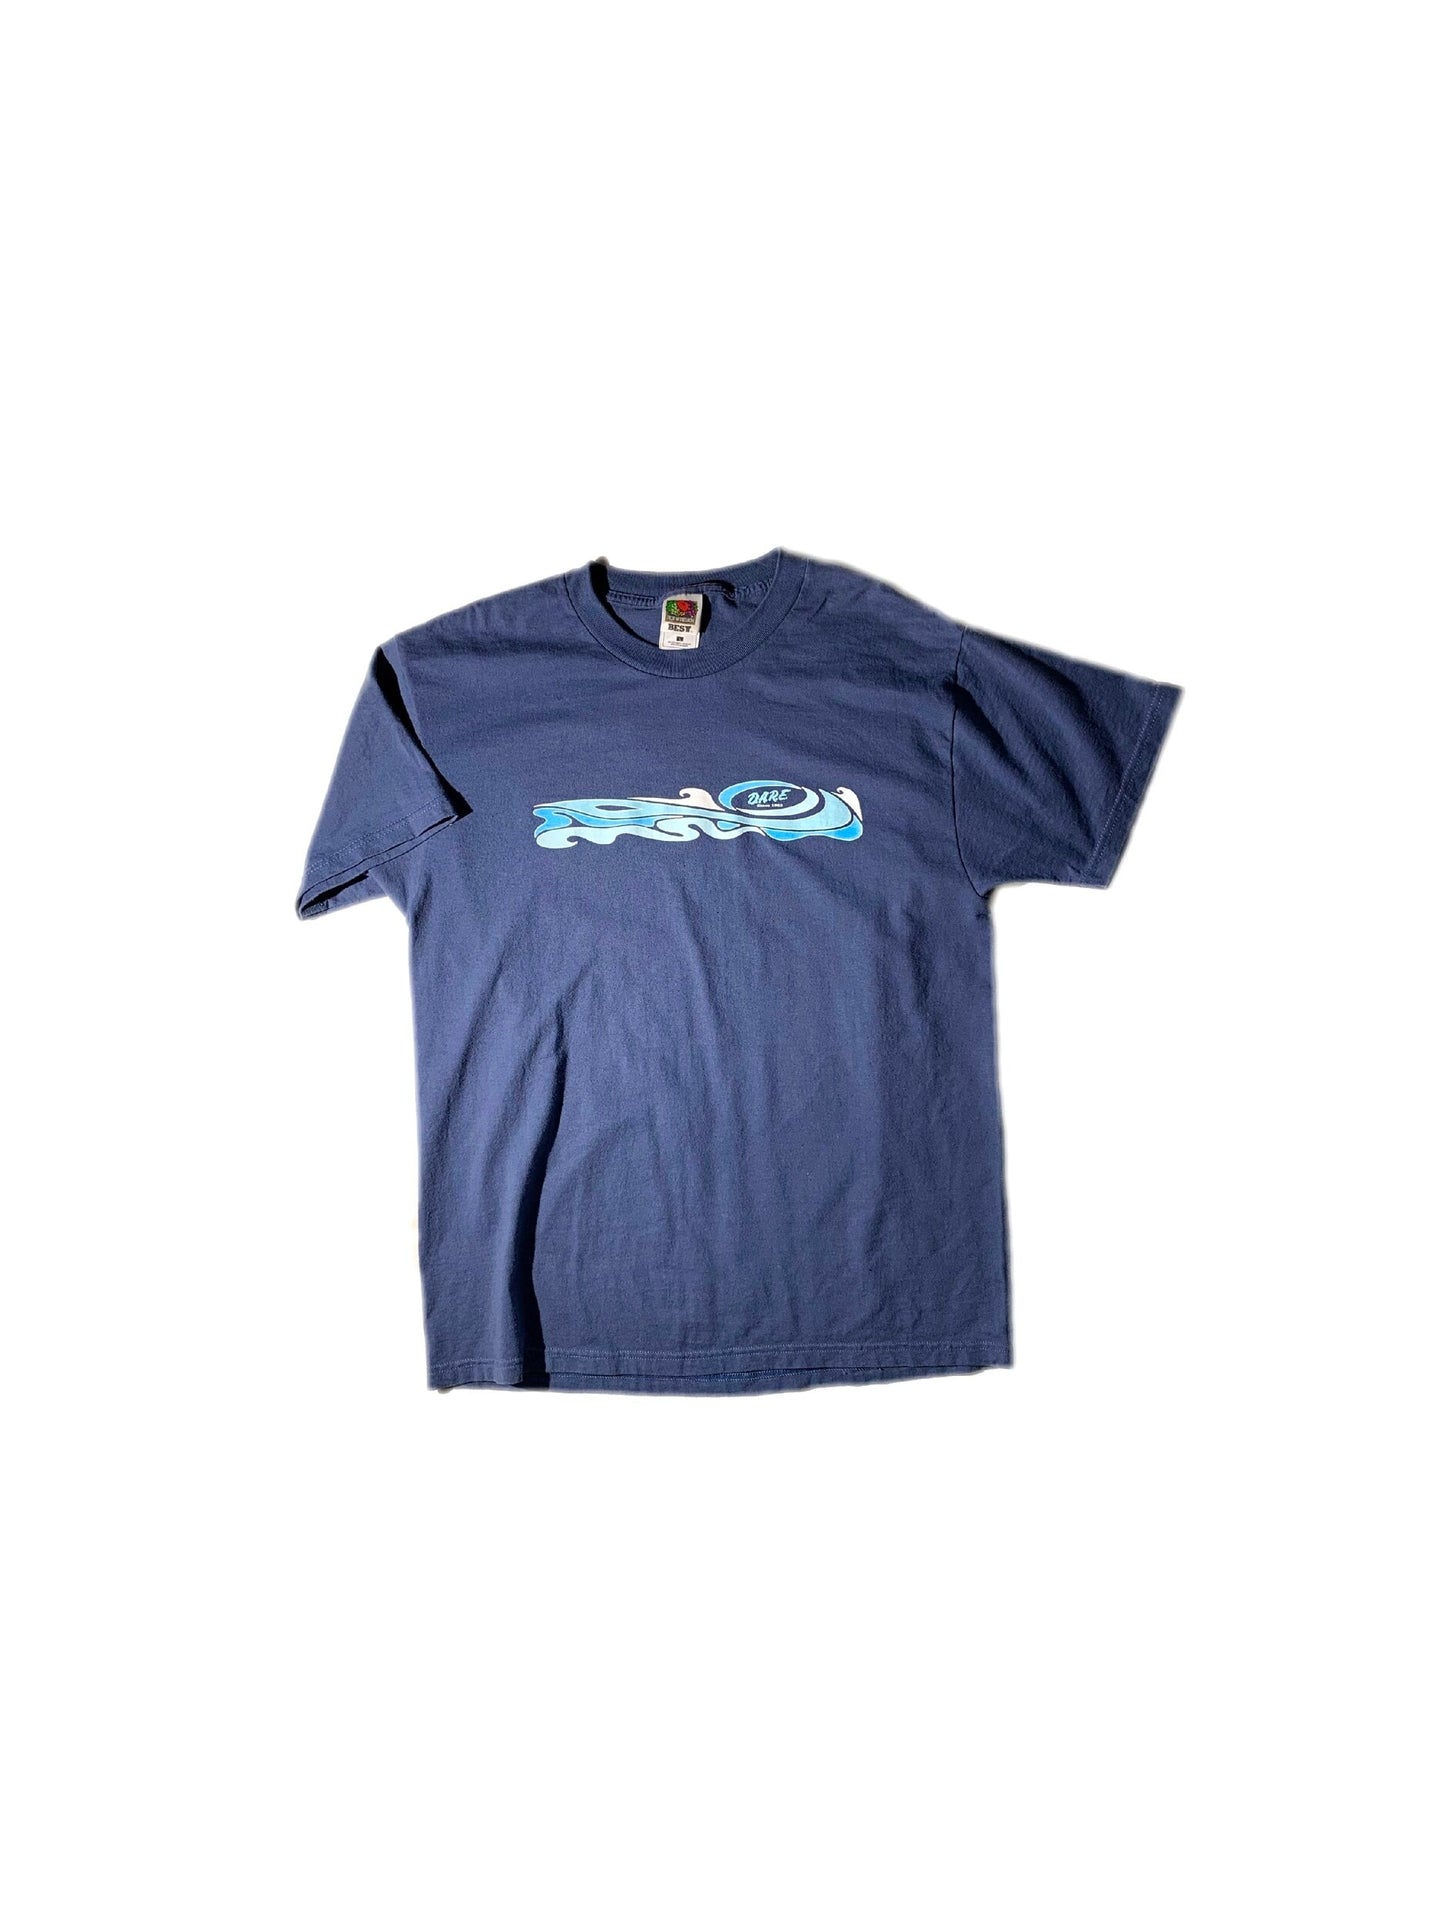 Vintage DARE Waves T-Shirt 🌊